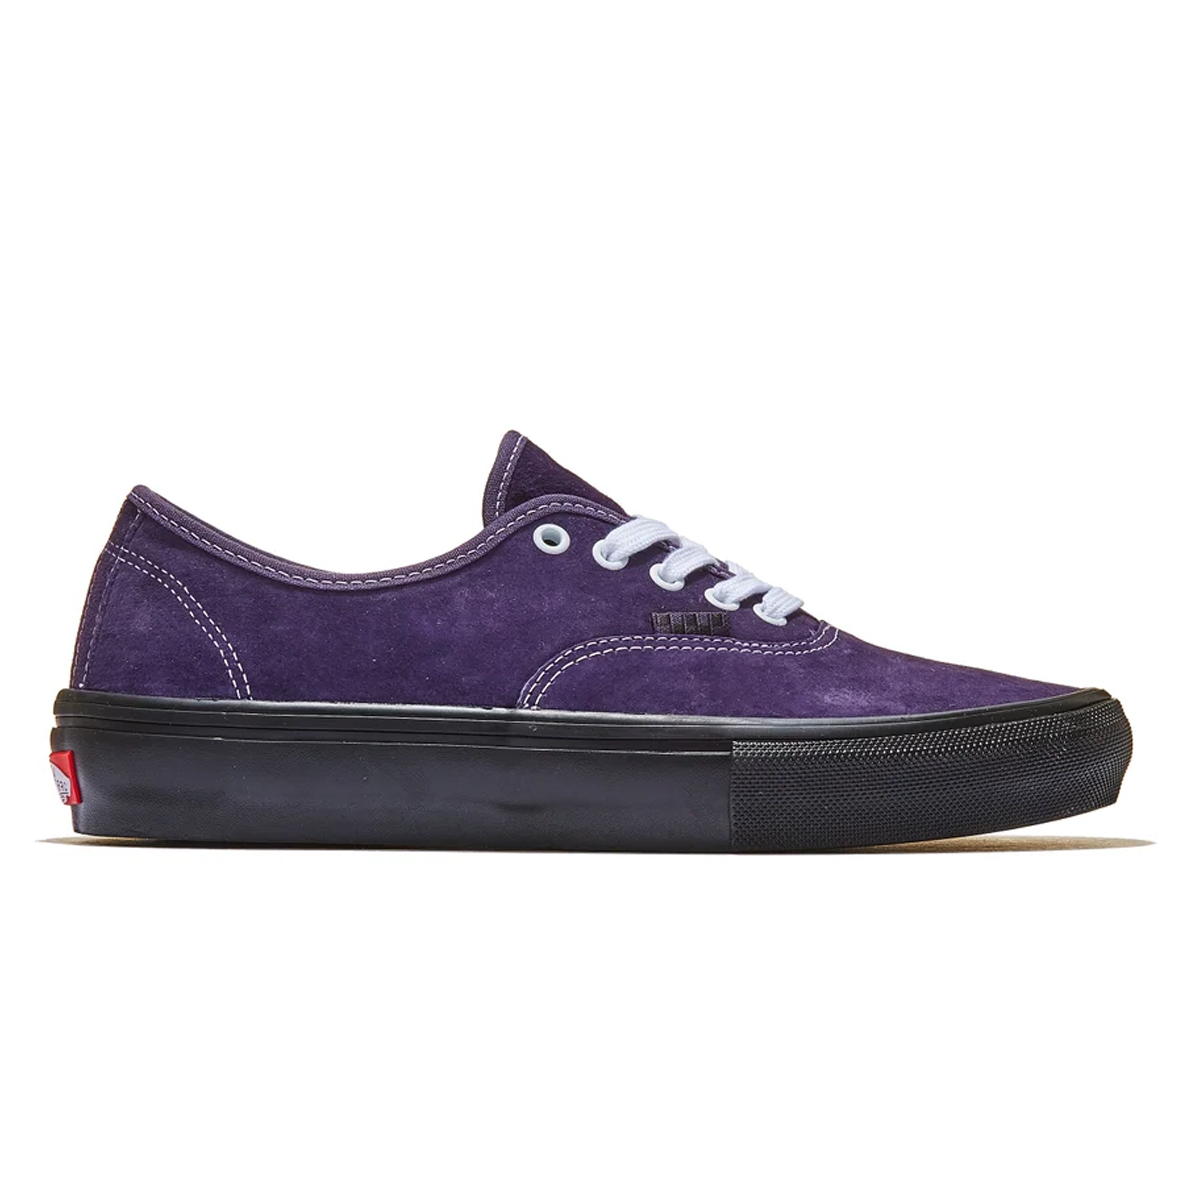 Vans Skate Authentic Pig Suede Shoes - Dark Purple